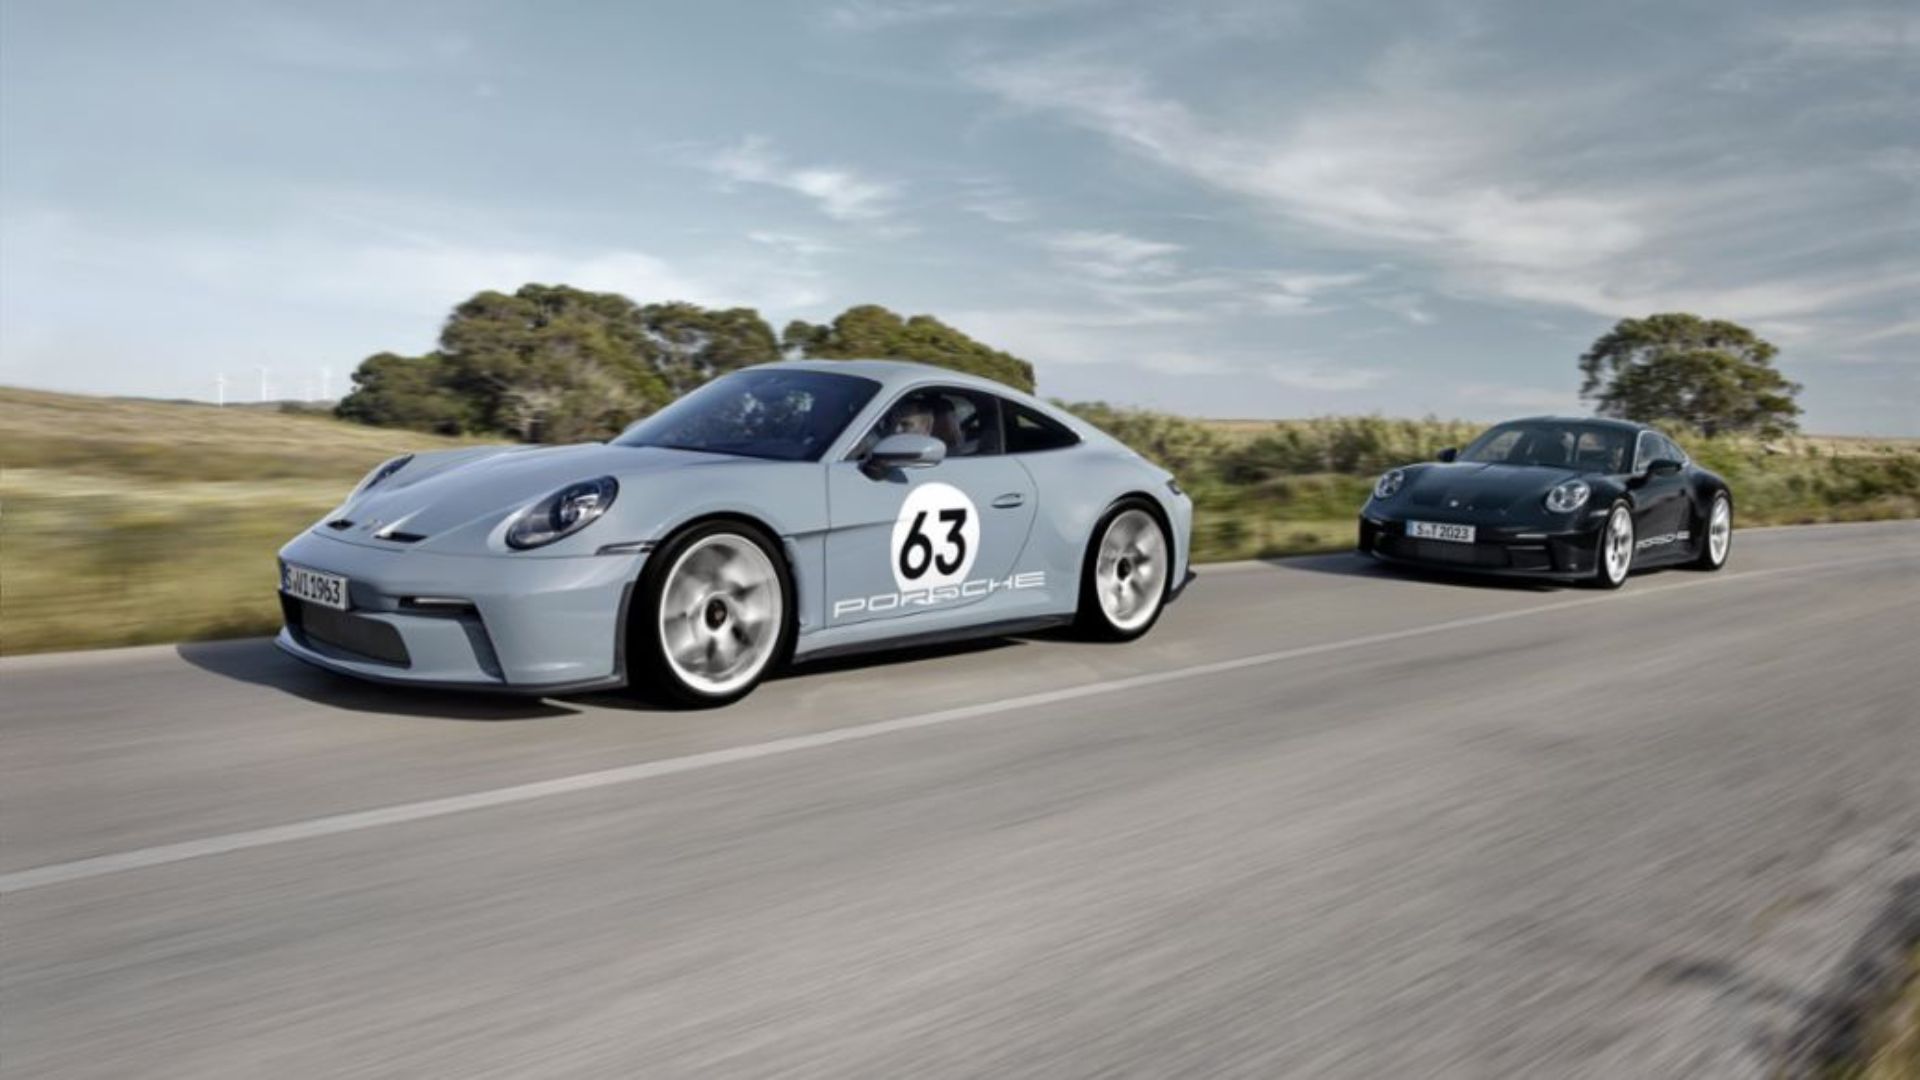 The new Porsche 911 S/T